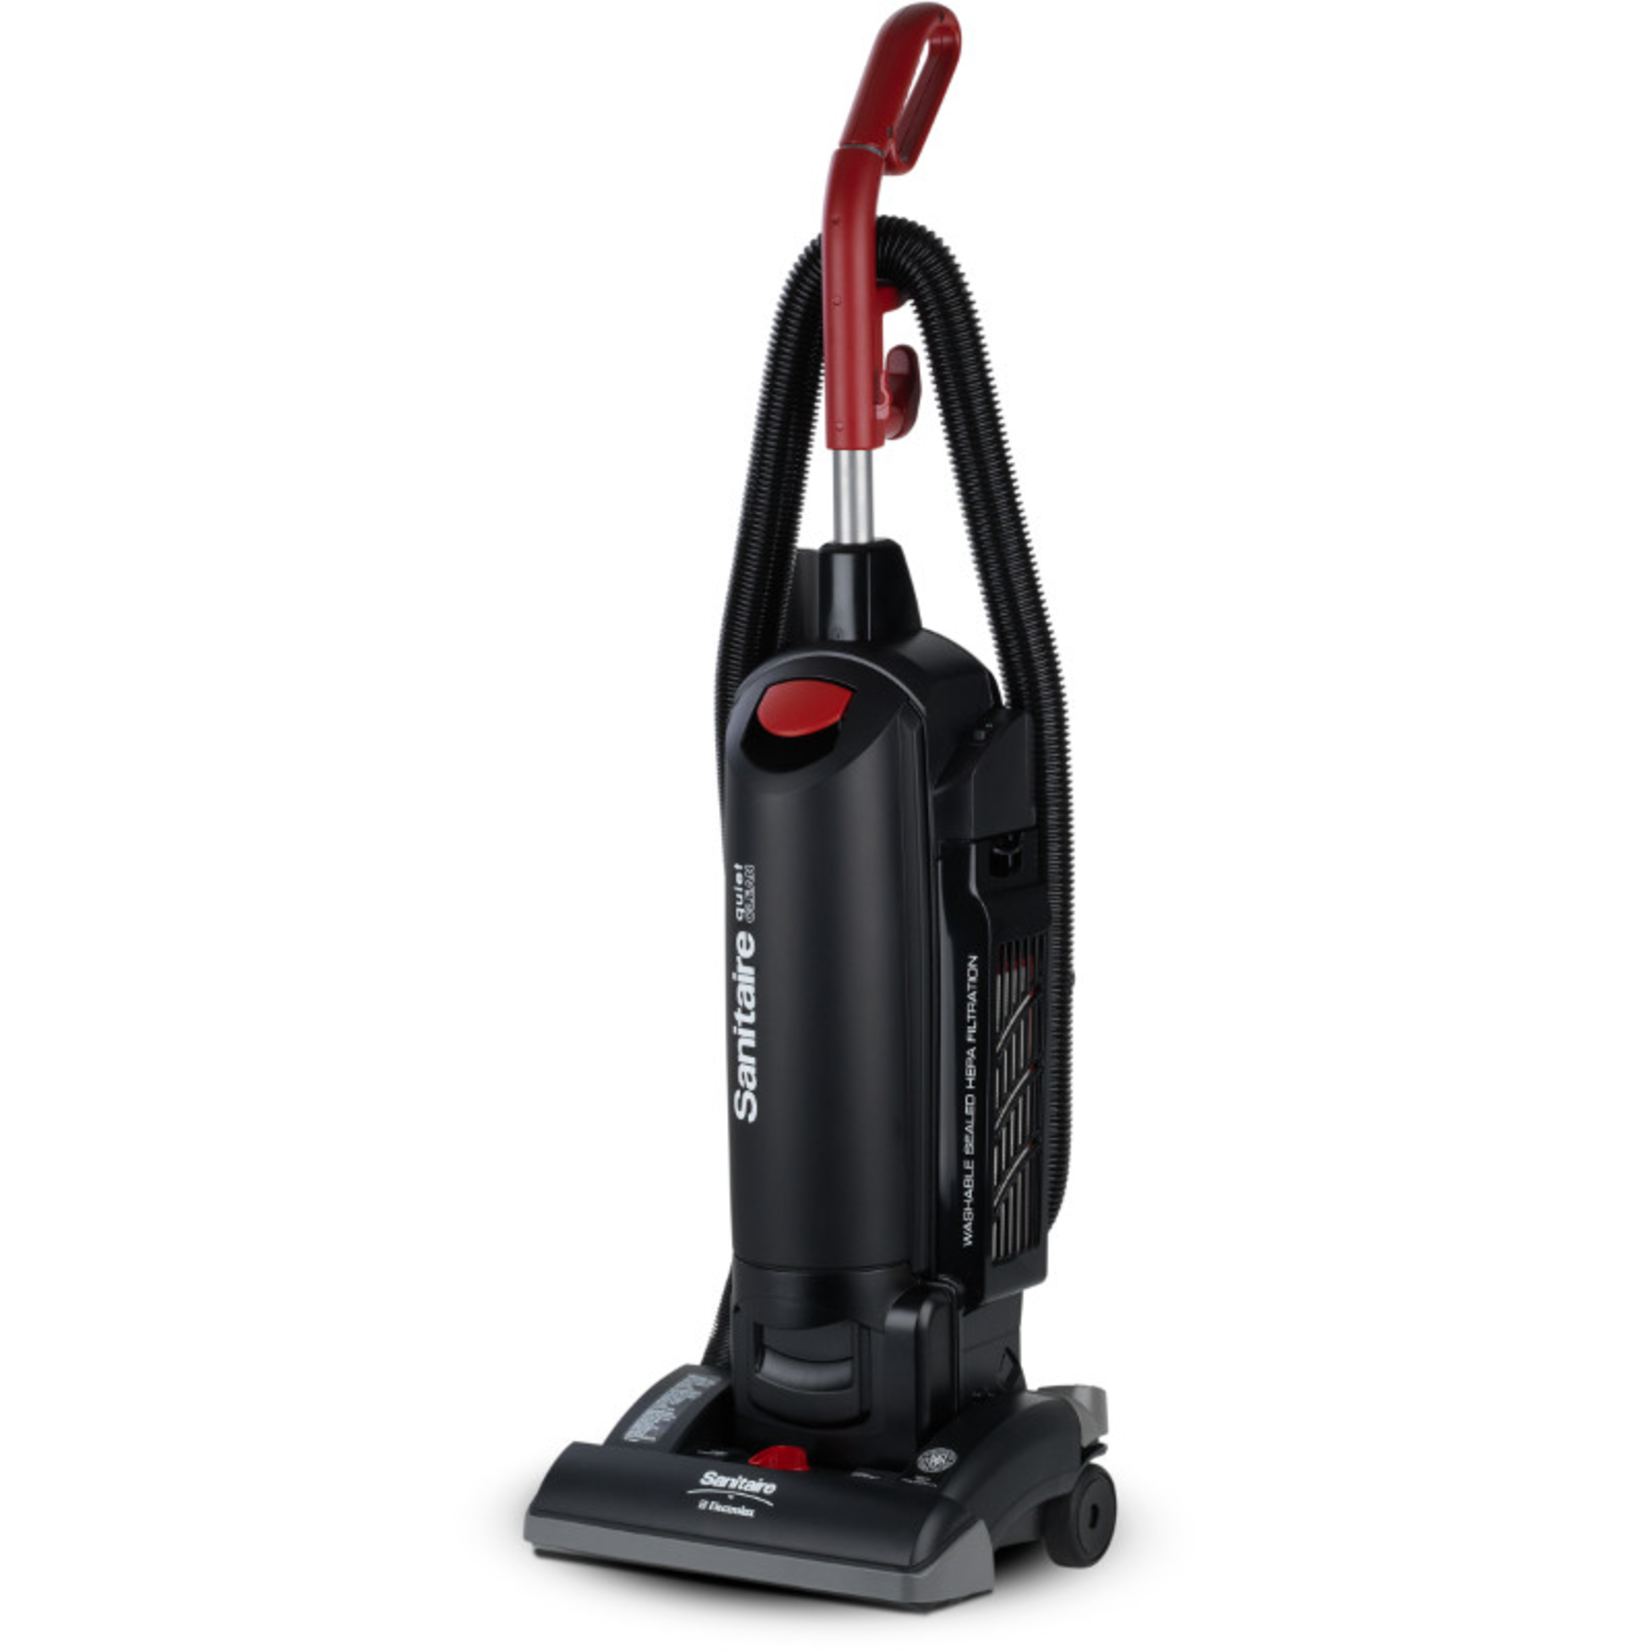 Sanitaire Sanitaire Genesis Commercial Upright Vacuum *No Longer Available*